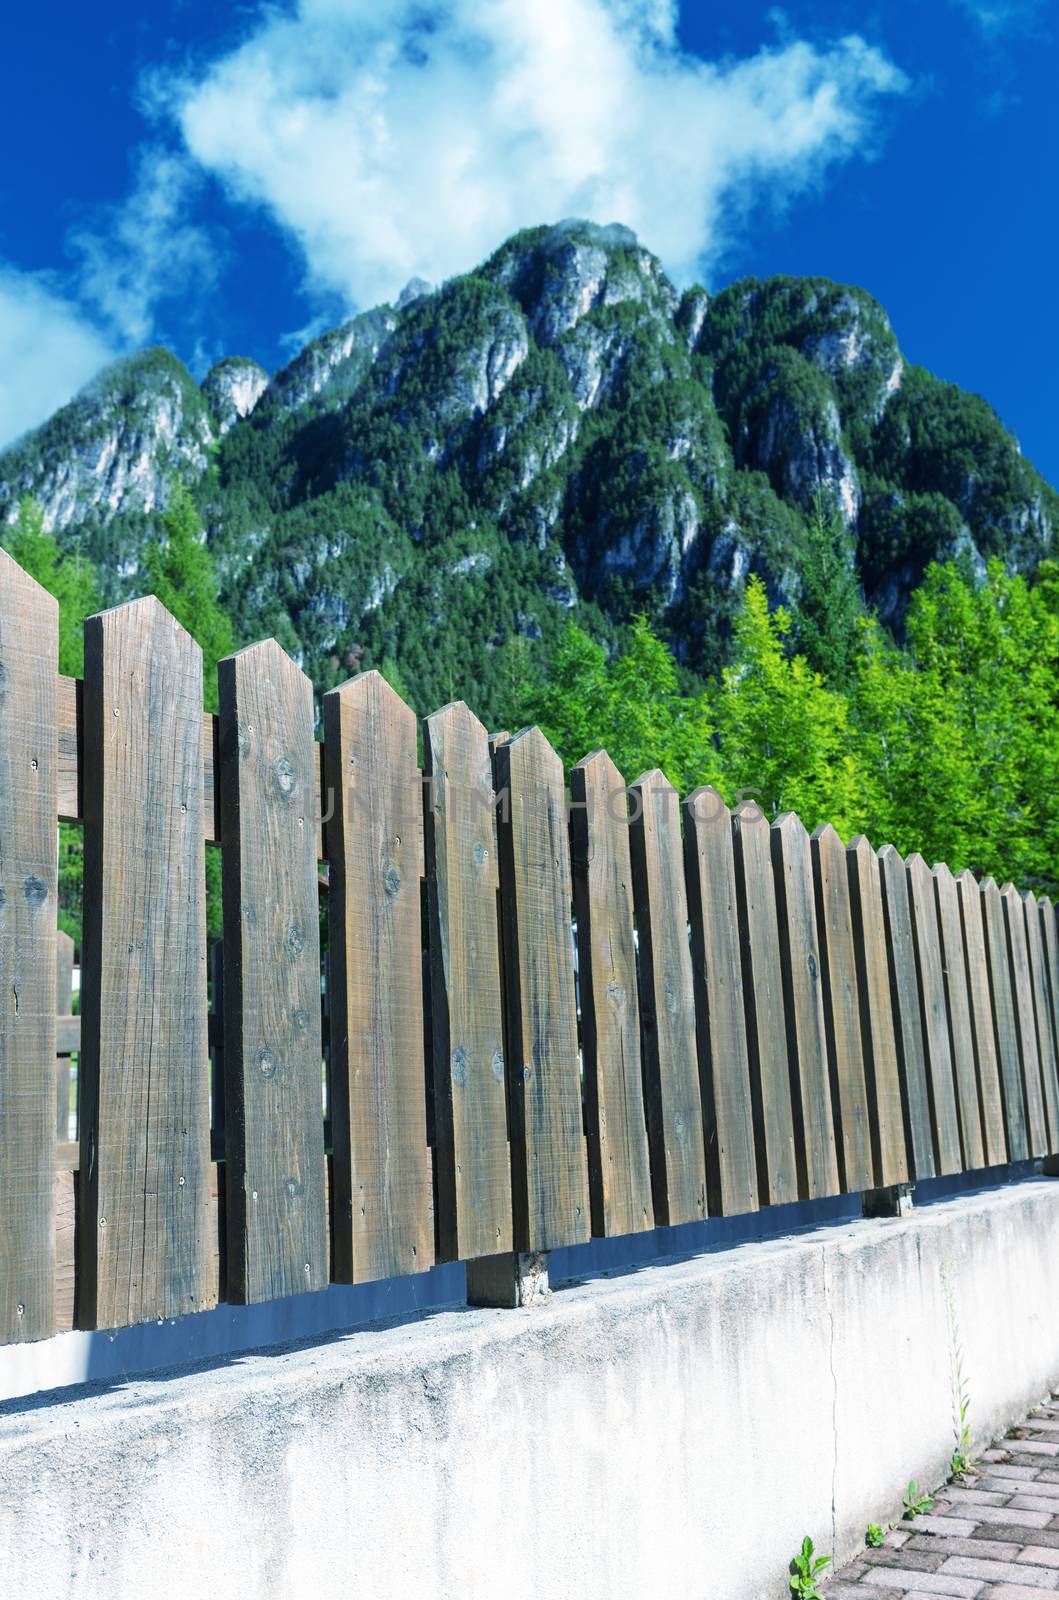 Fence underneath a beautiful mountain.